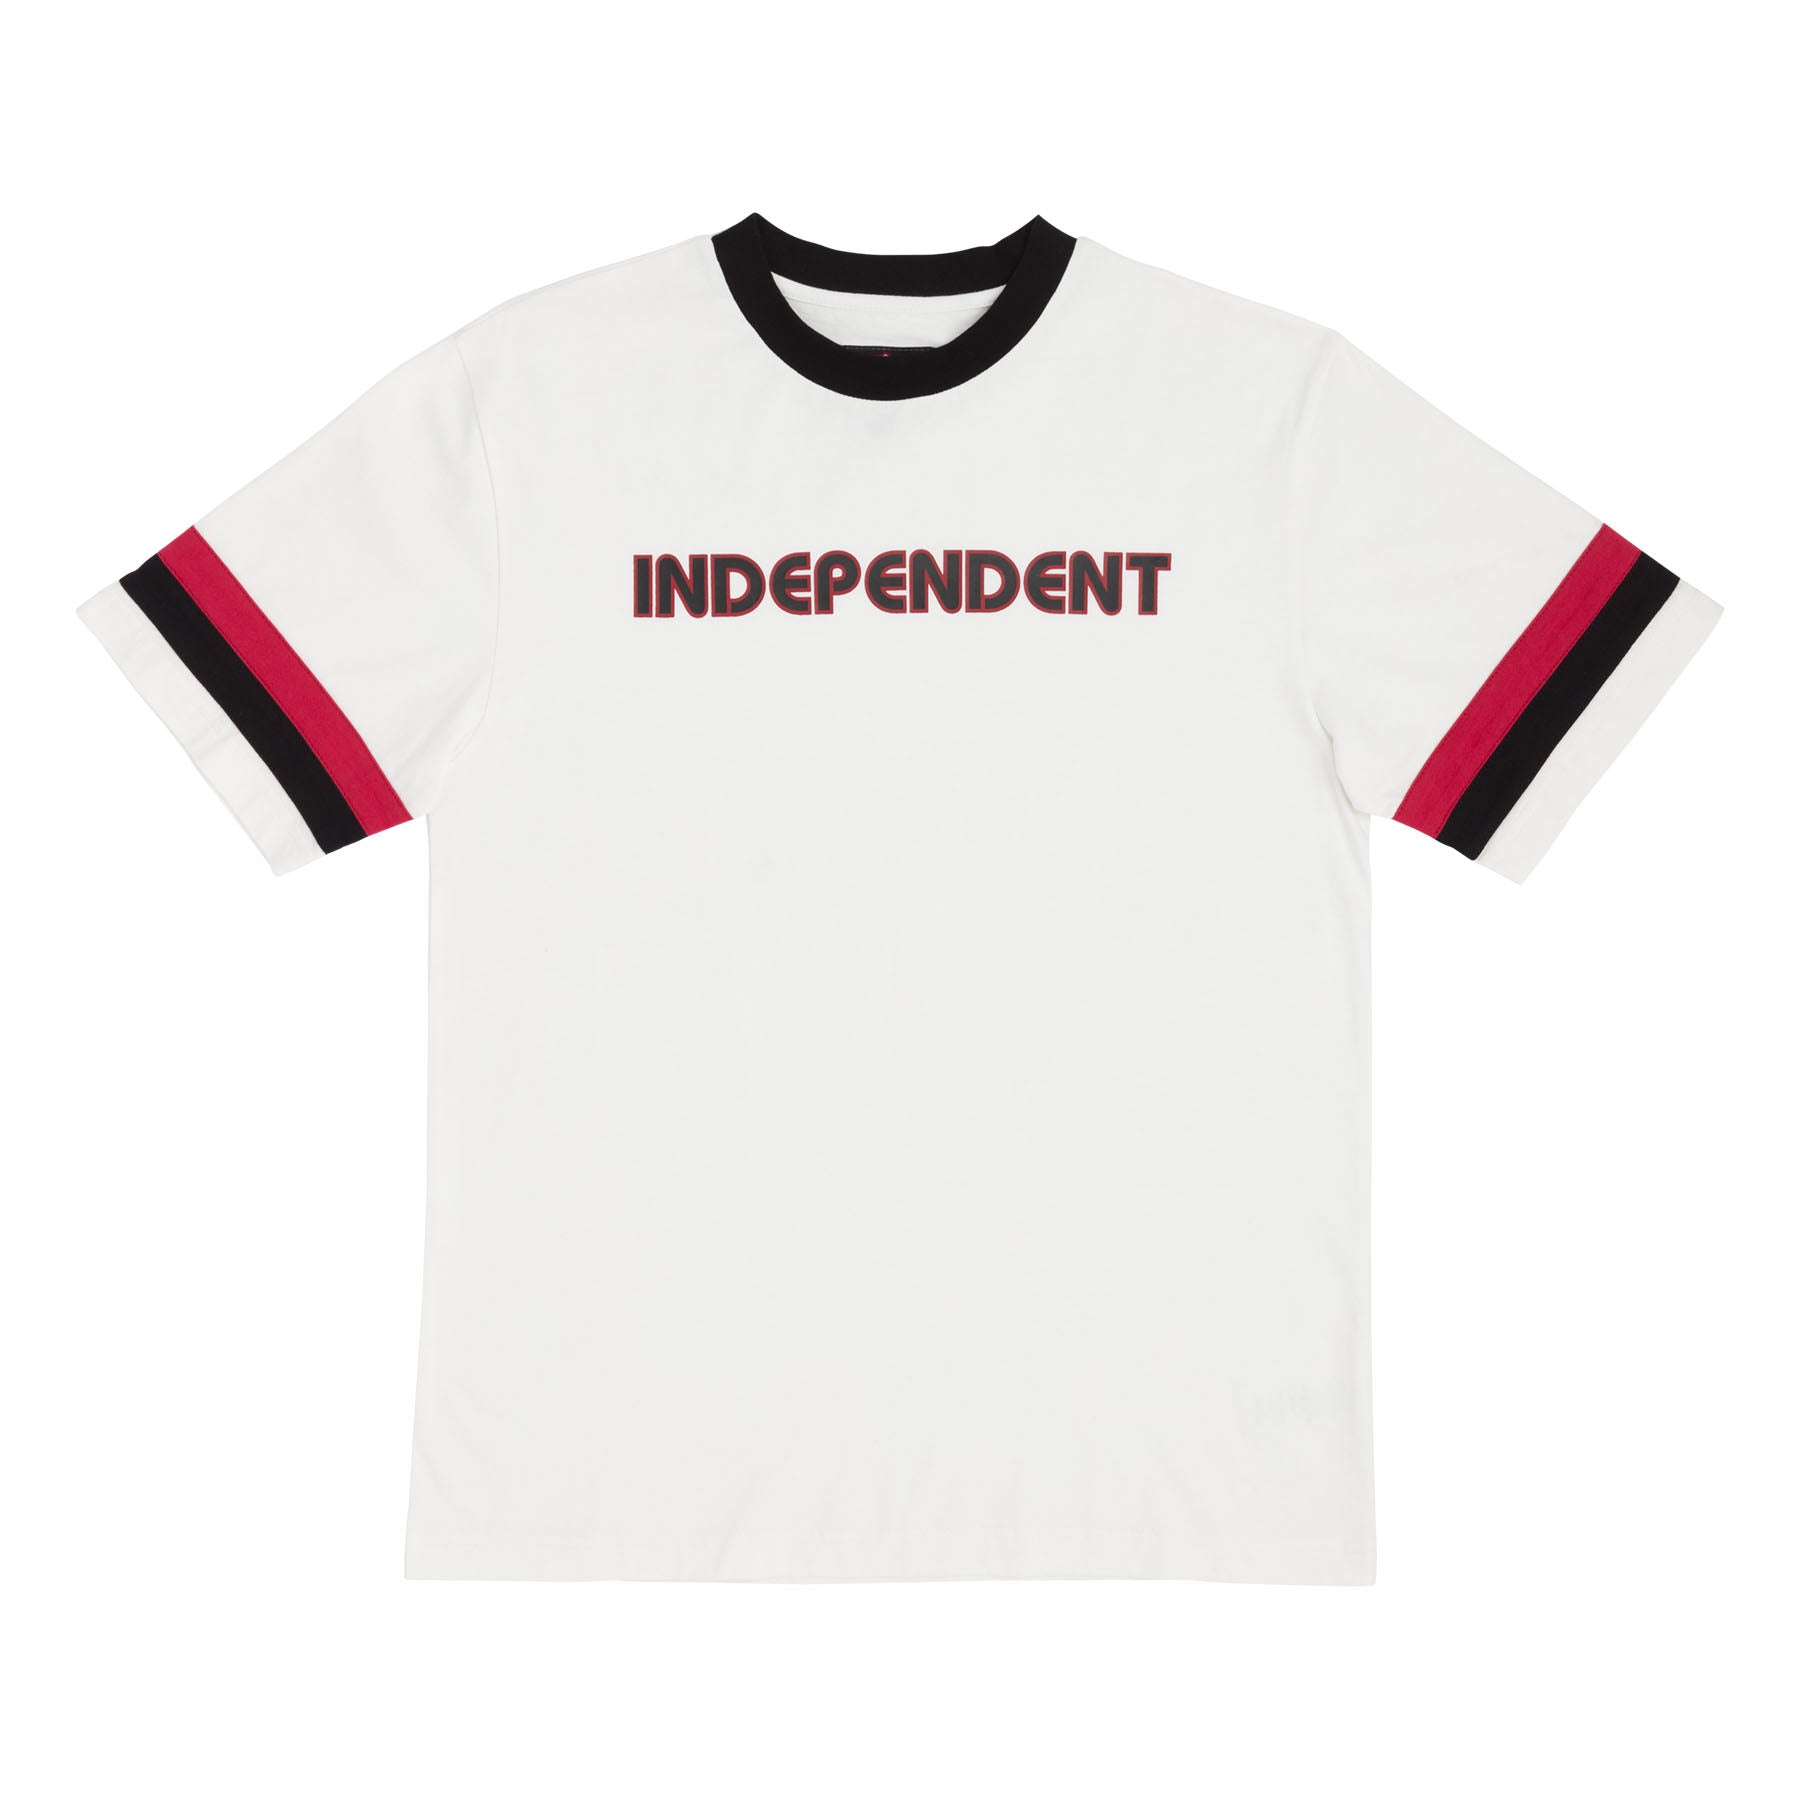 Independent Bauhaus S/S Cotton Jersey Off White